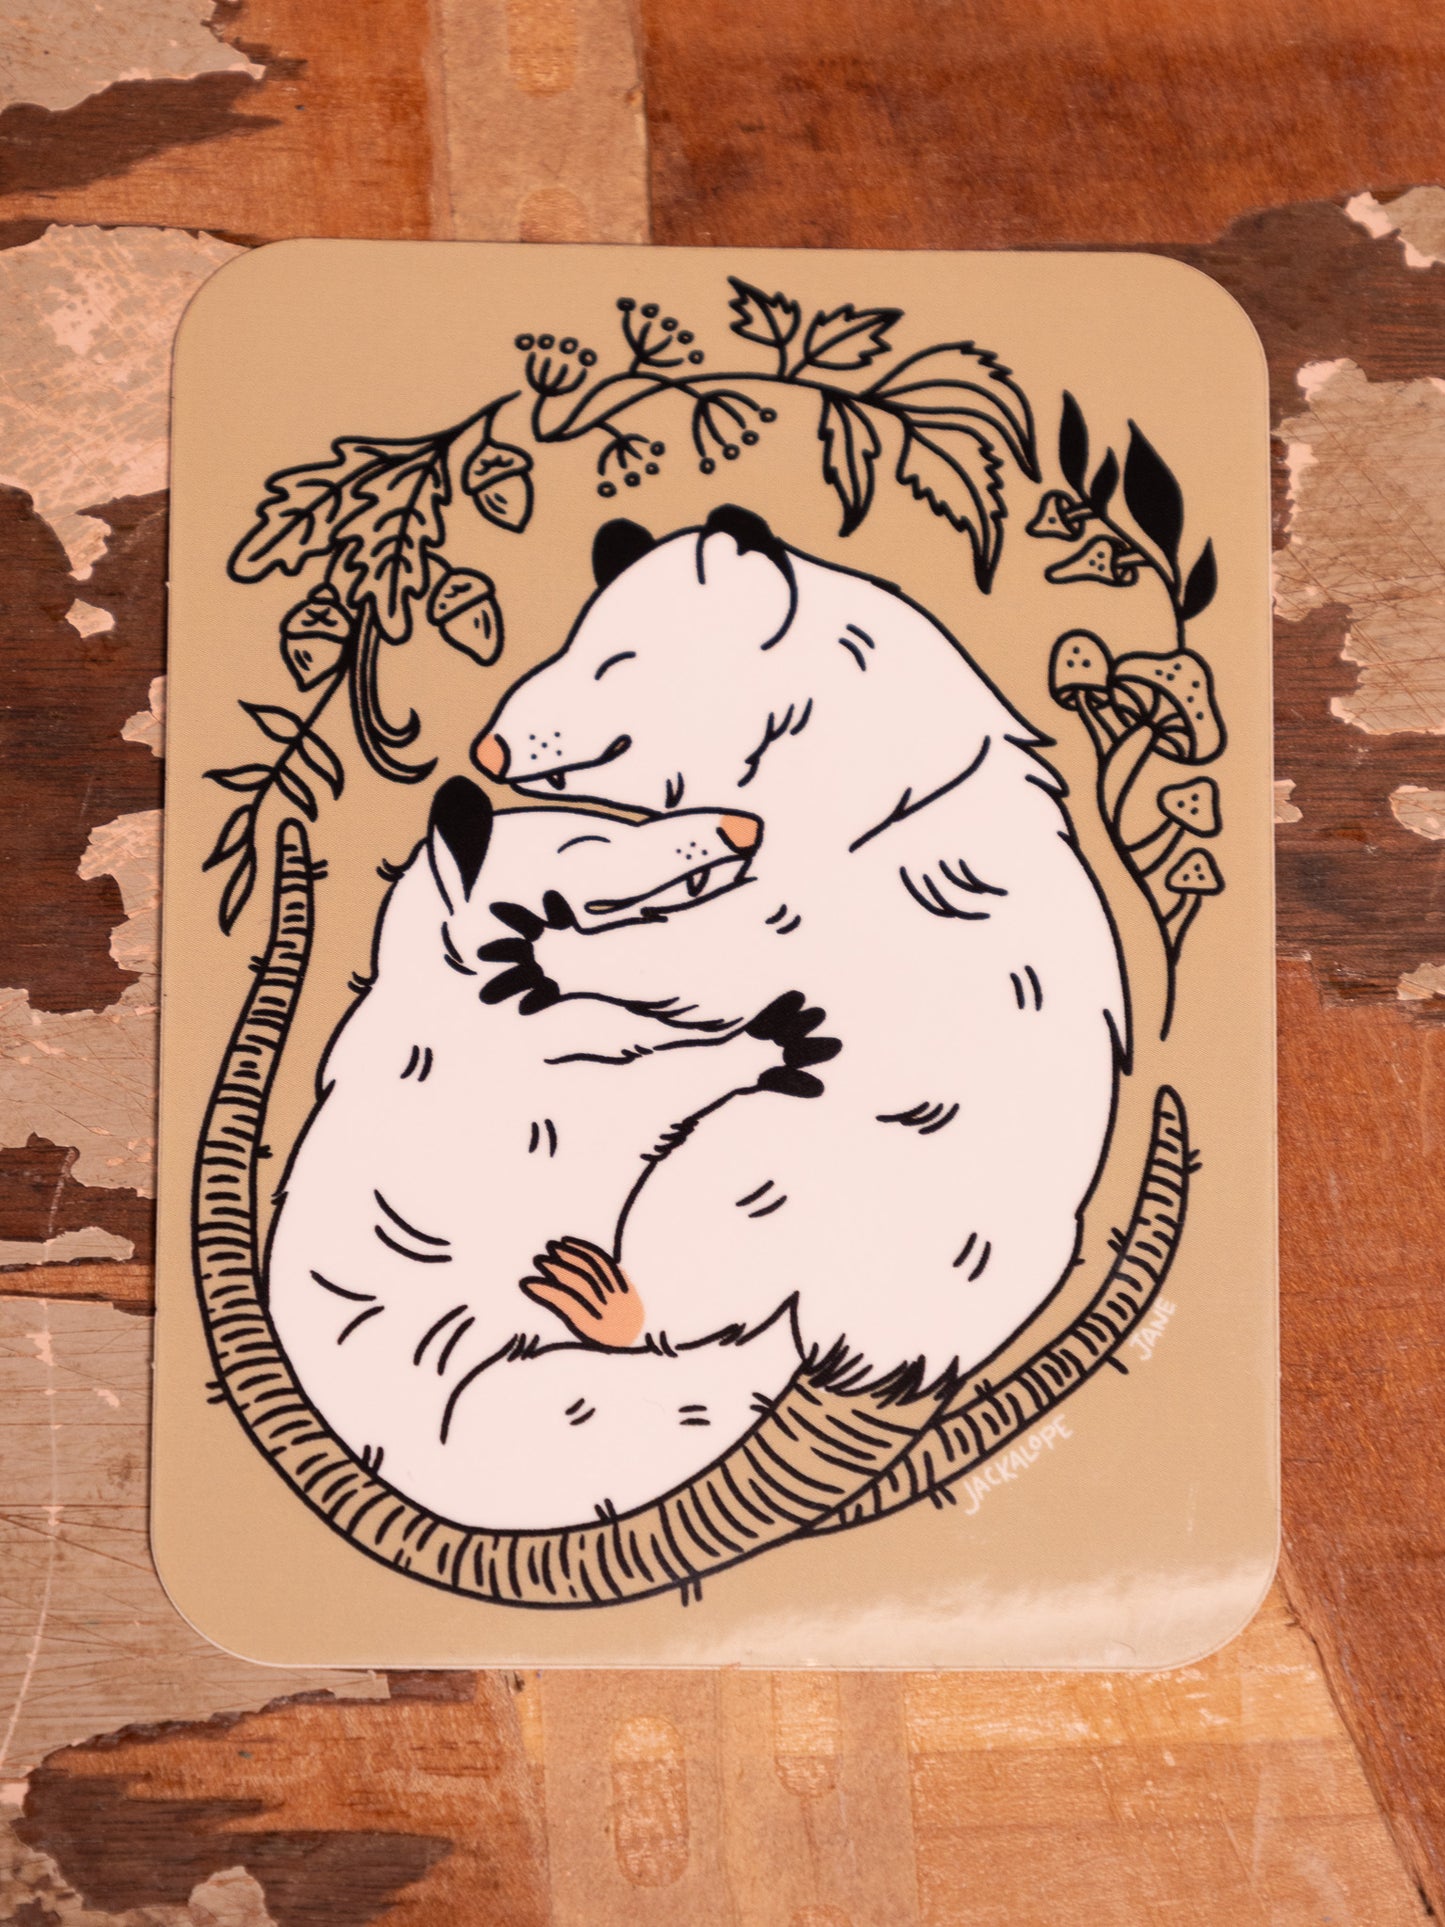 Snuggling Possum Band Sticker